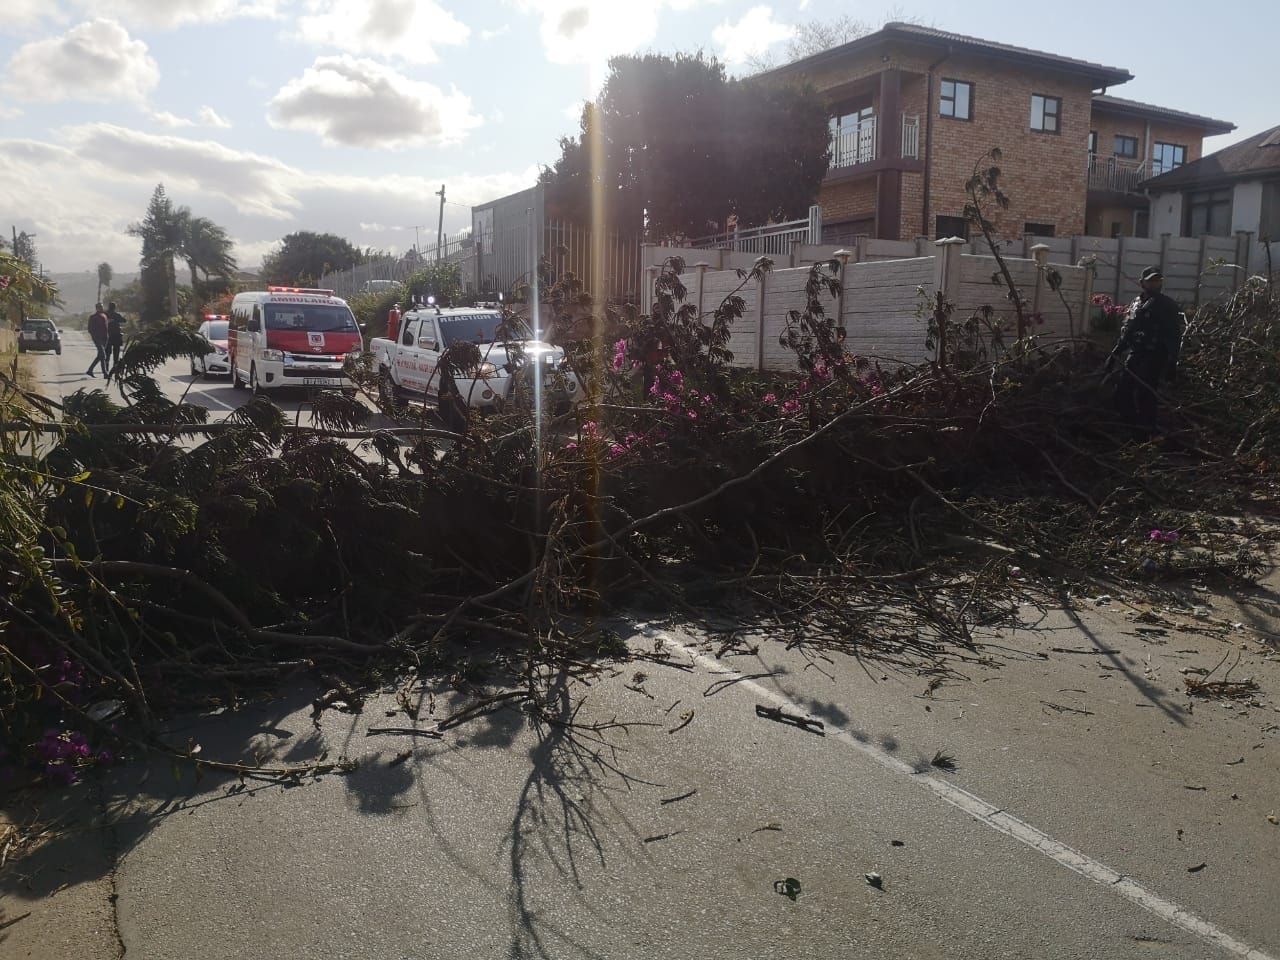 Road closure due to fallen tree in Ottawa